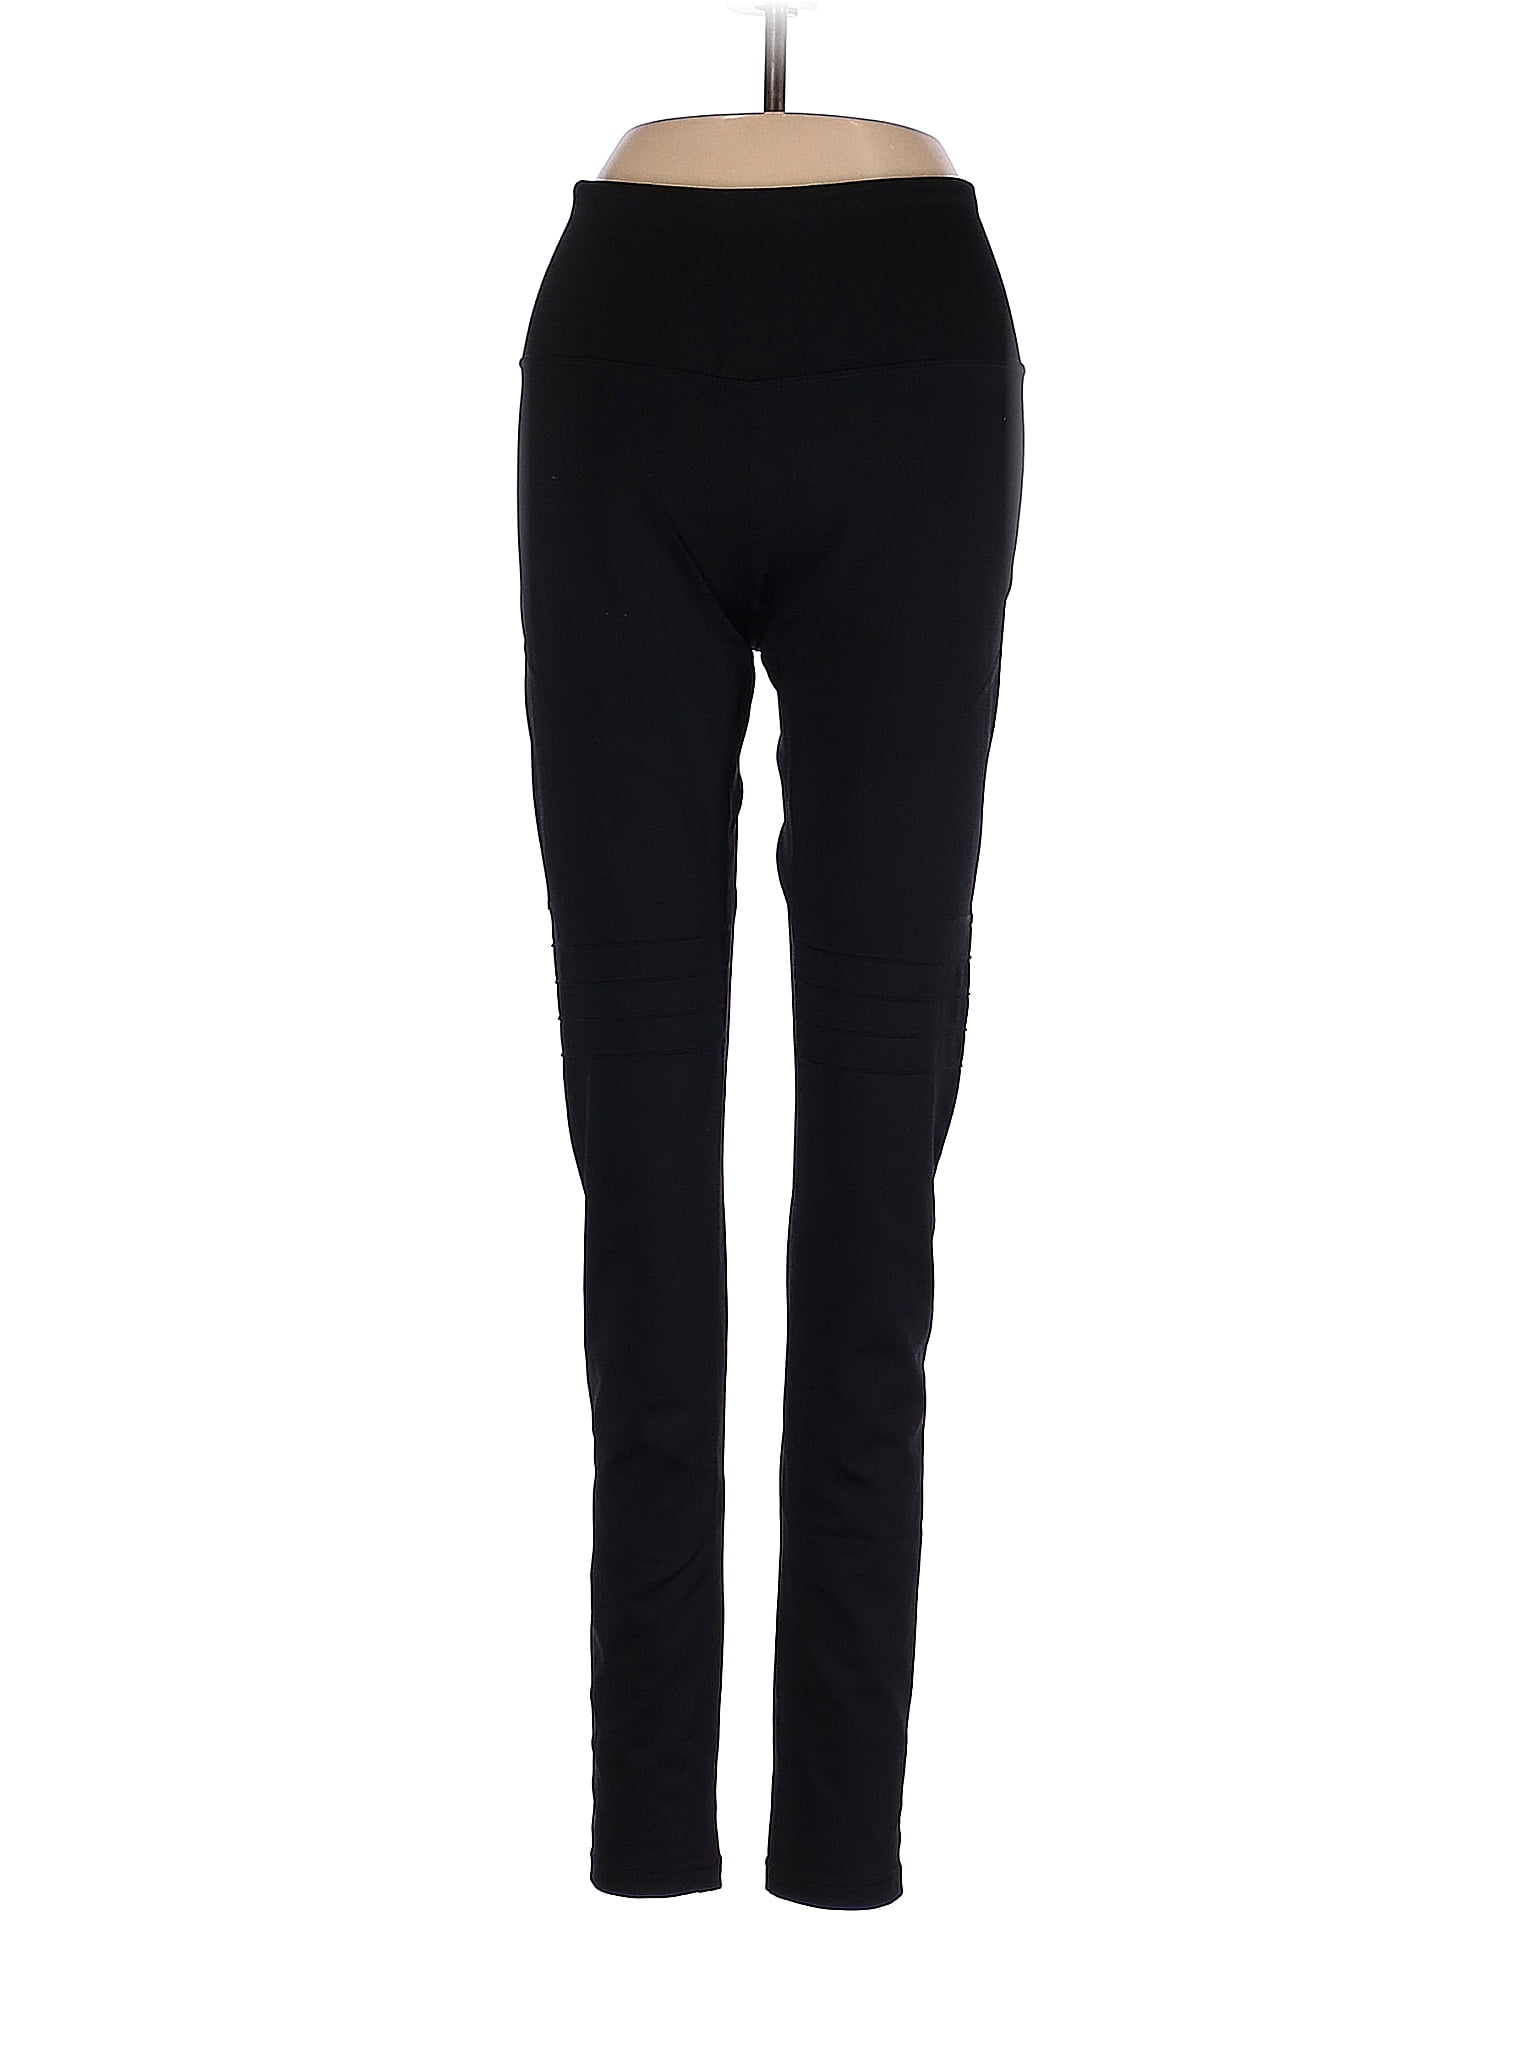 Z by Zella Black Yoga Pants Size L - 68% off